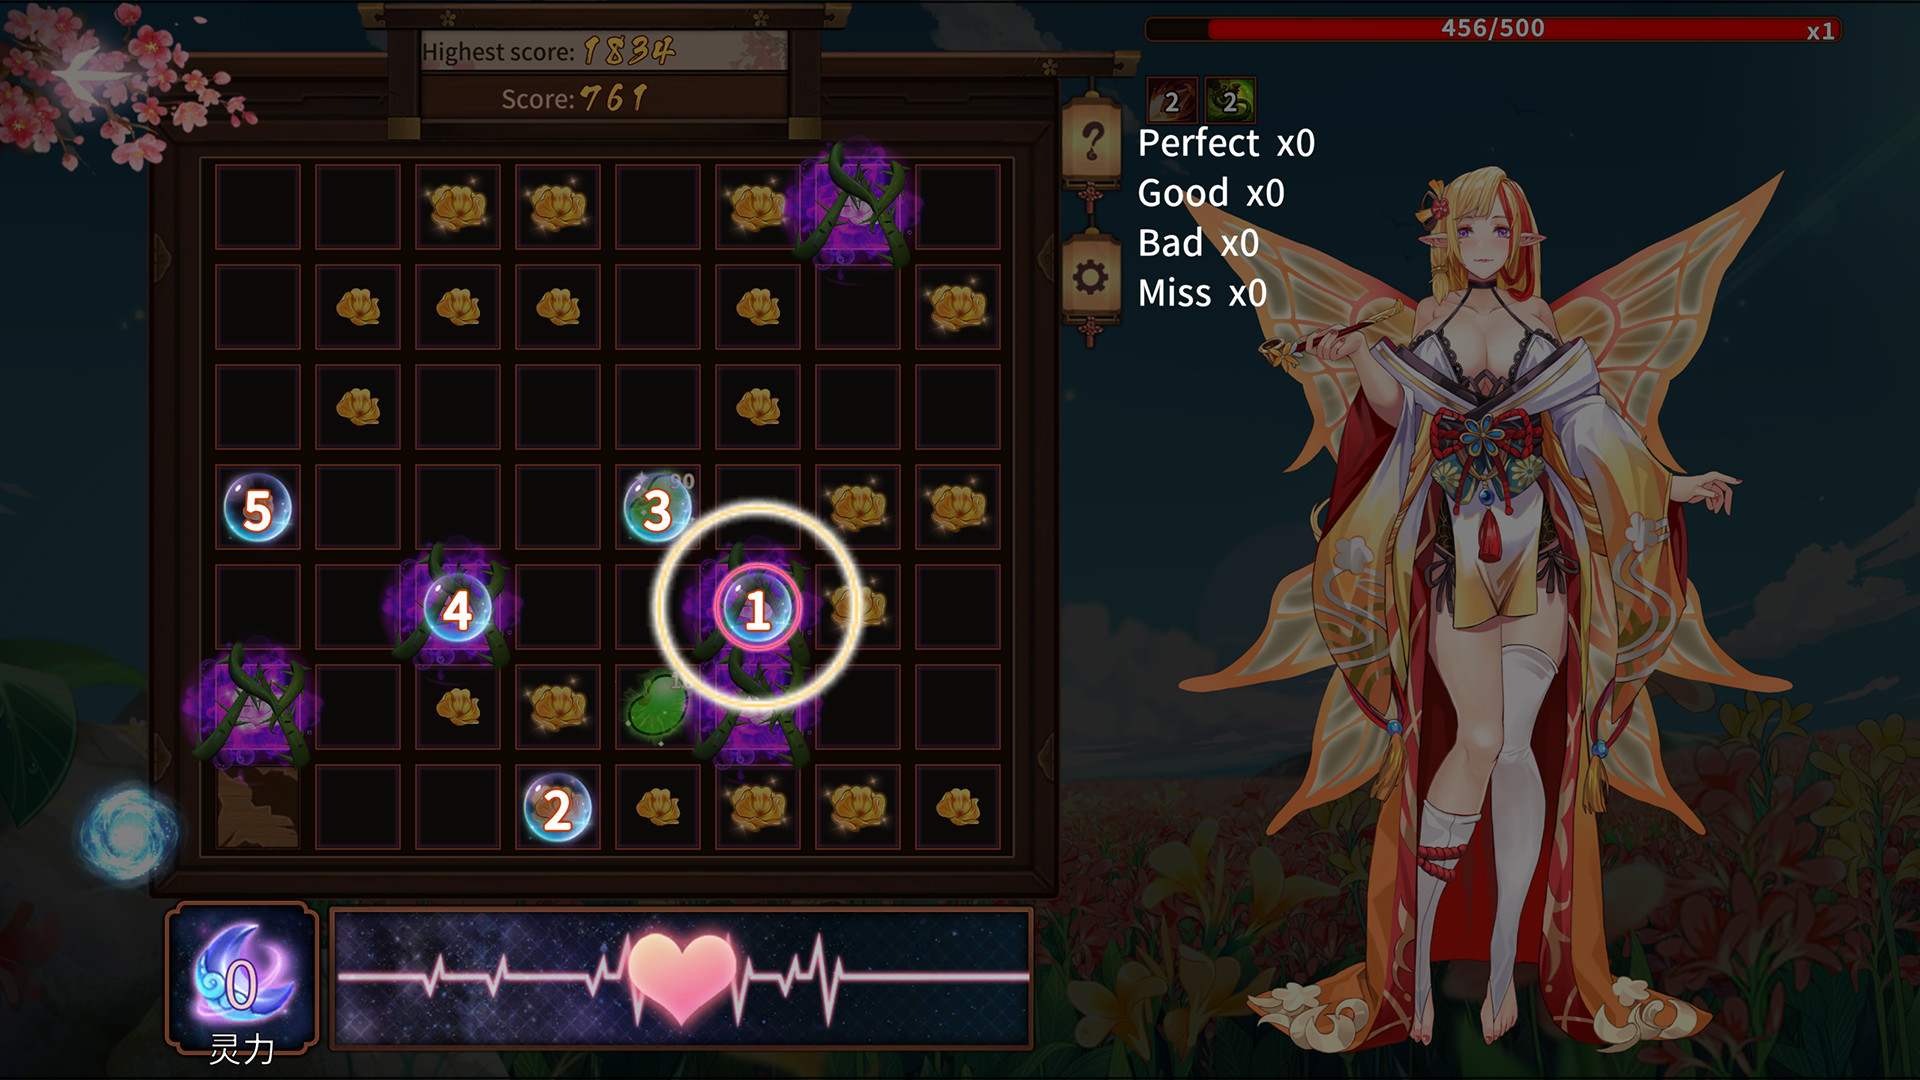 Save 30% on Flower girl 2 - 5 new characters bonus on Steam